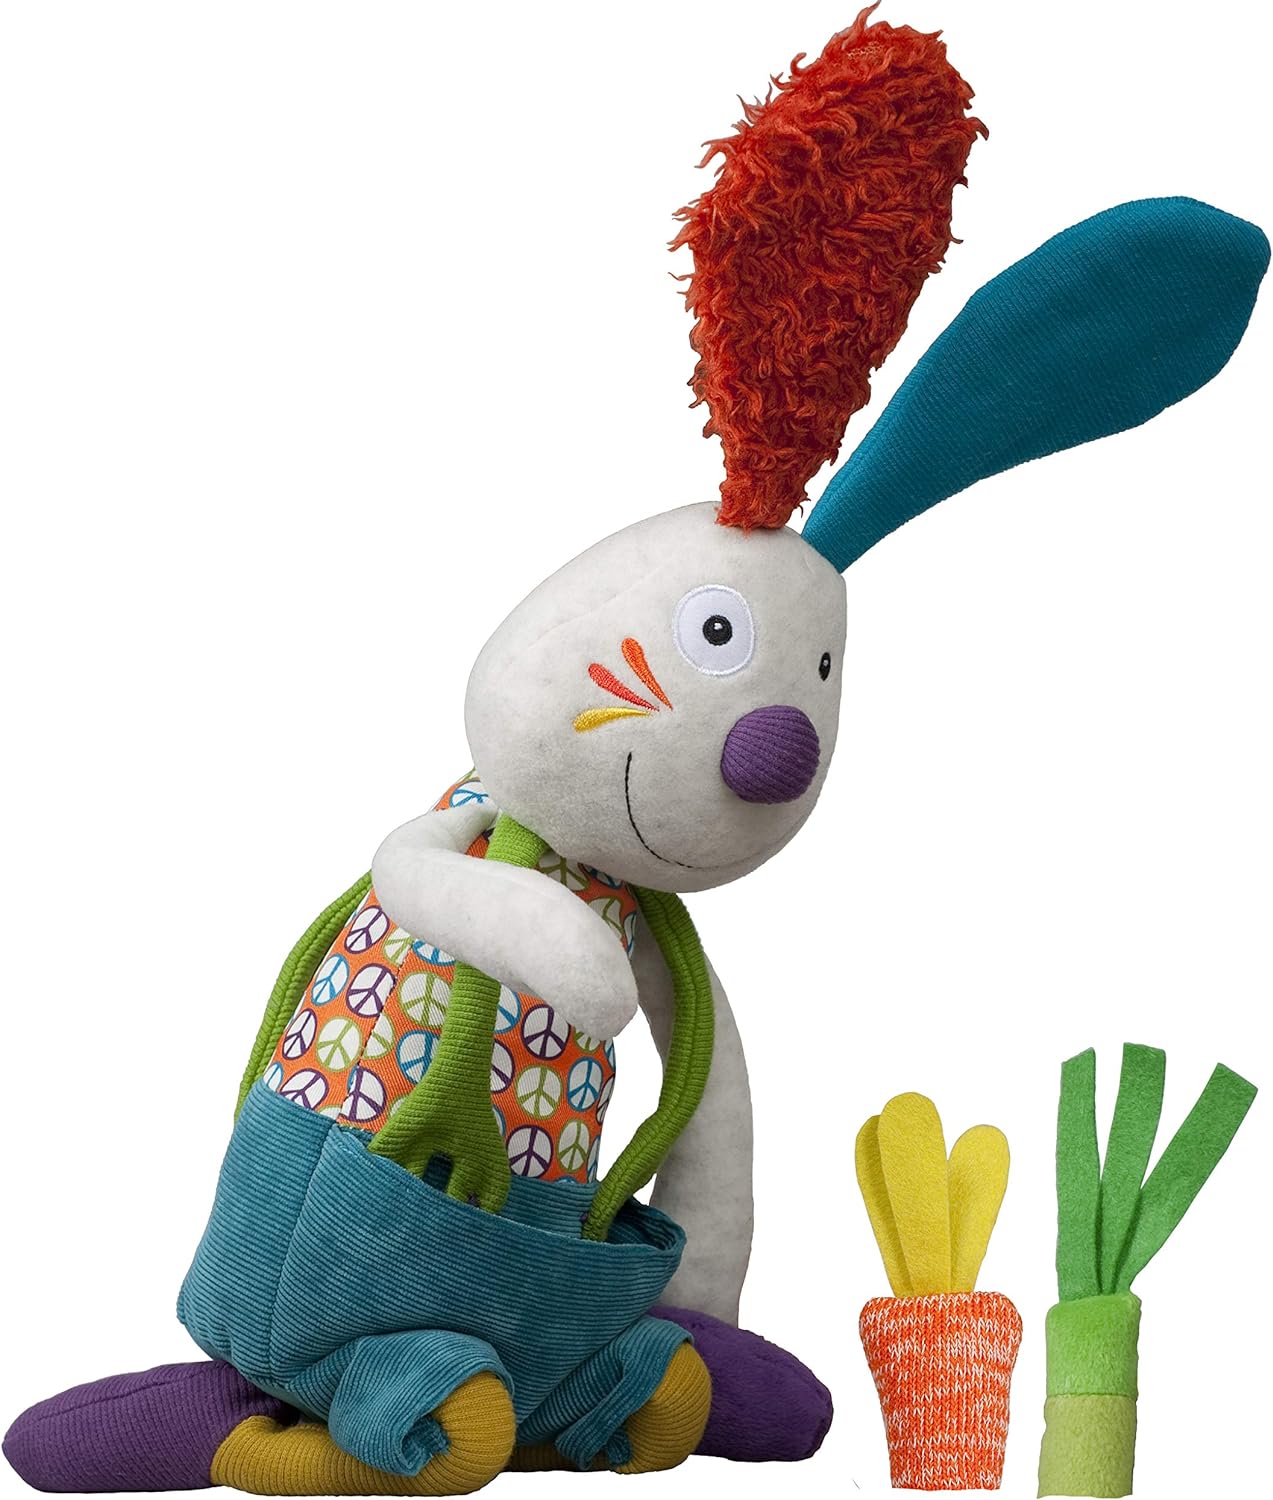 Ebulobo - Jeff The Activity Rabbit - Baby Toy